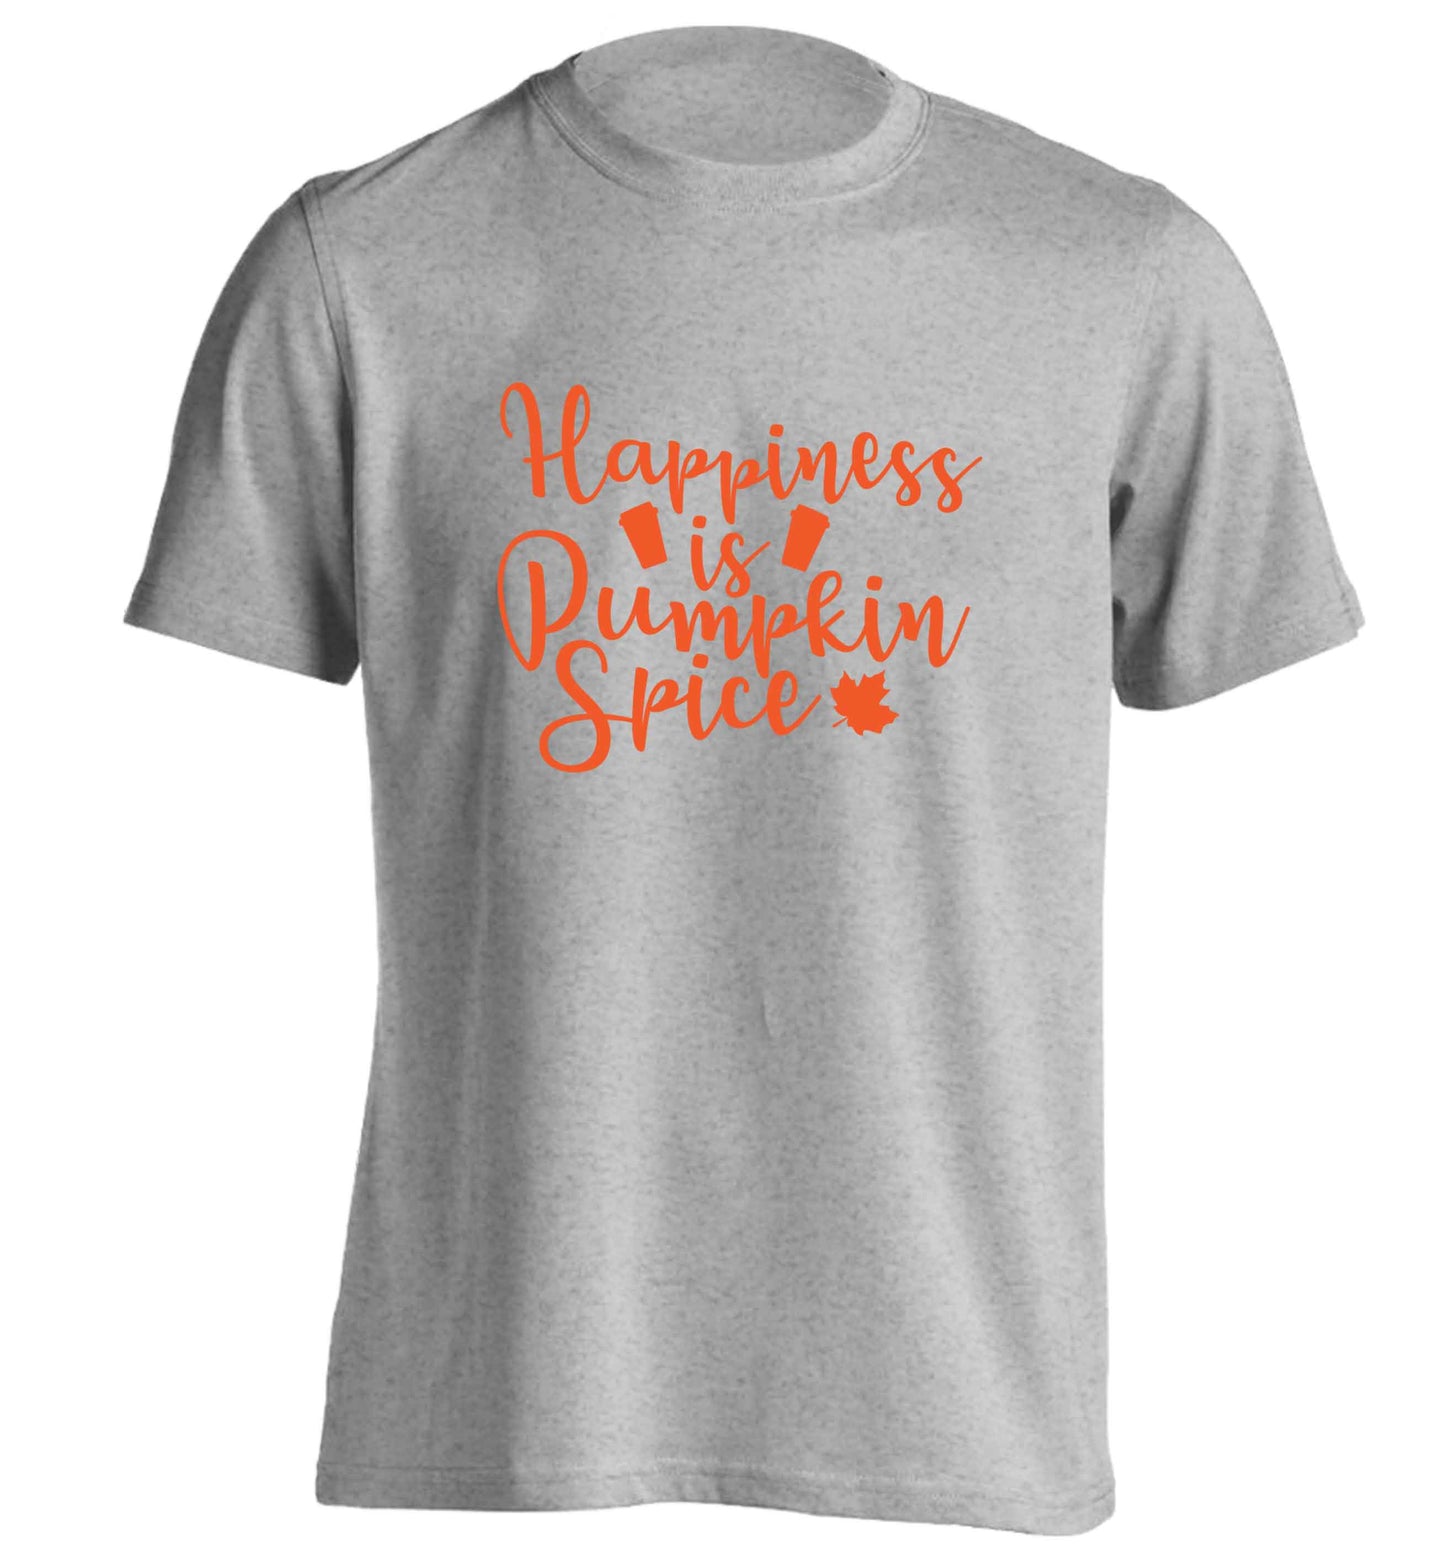 Happiness Pumpkin Spice adults unisex grey Tshirt 2XL